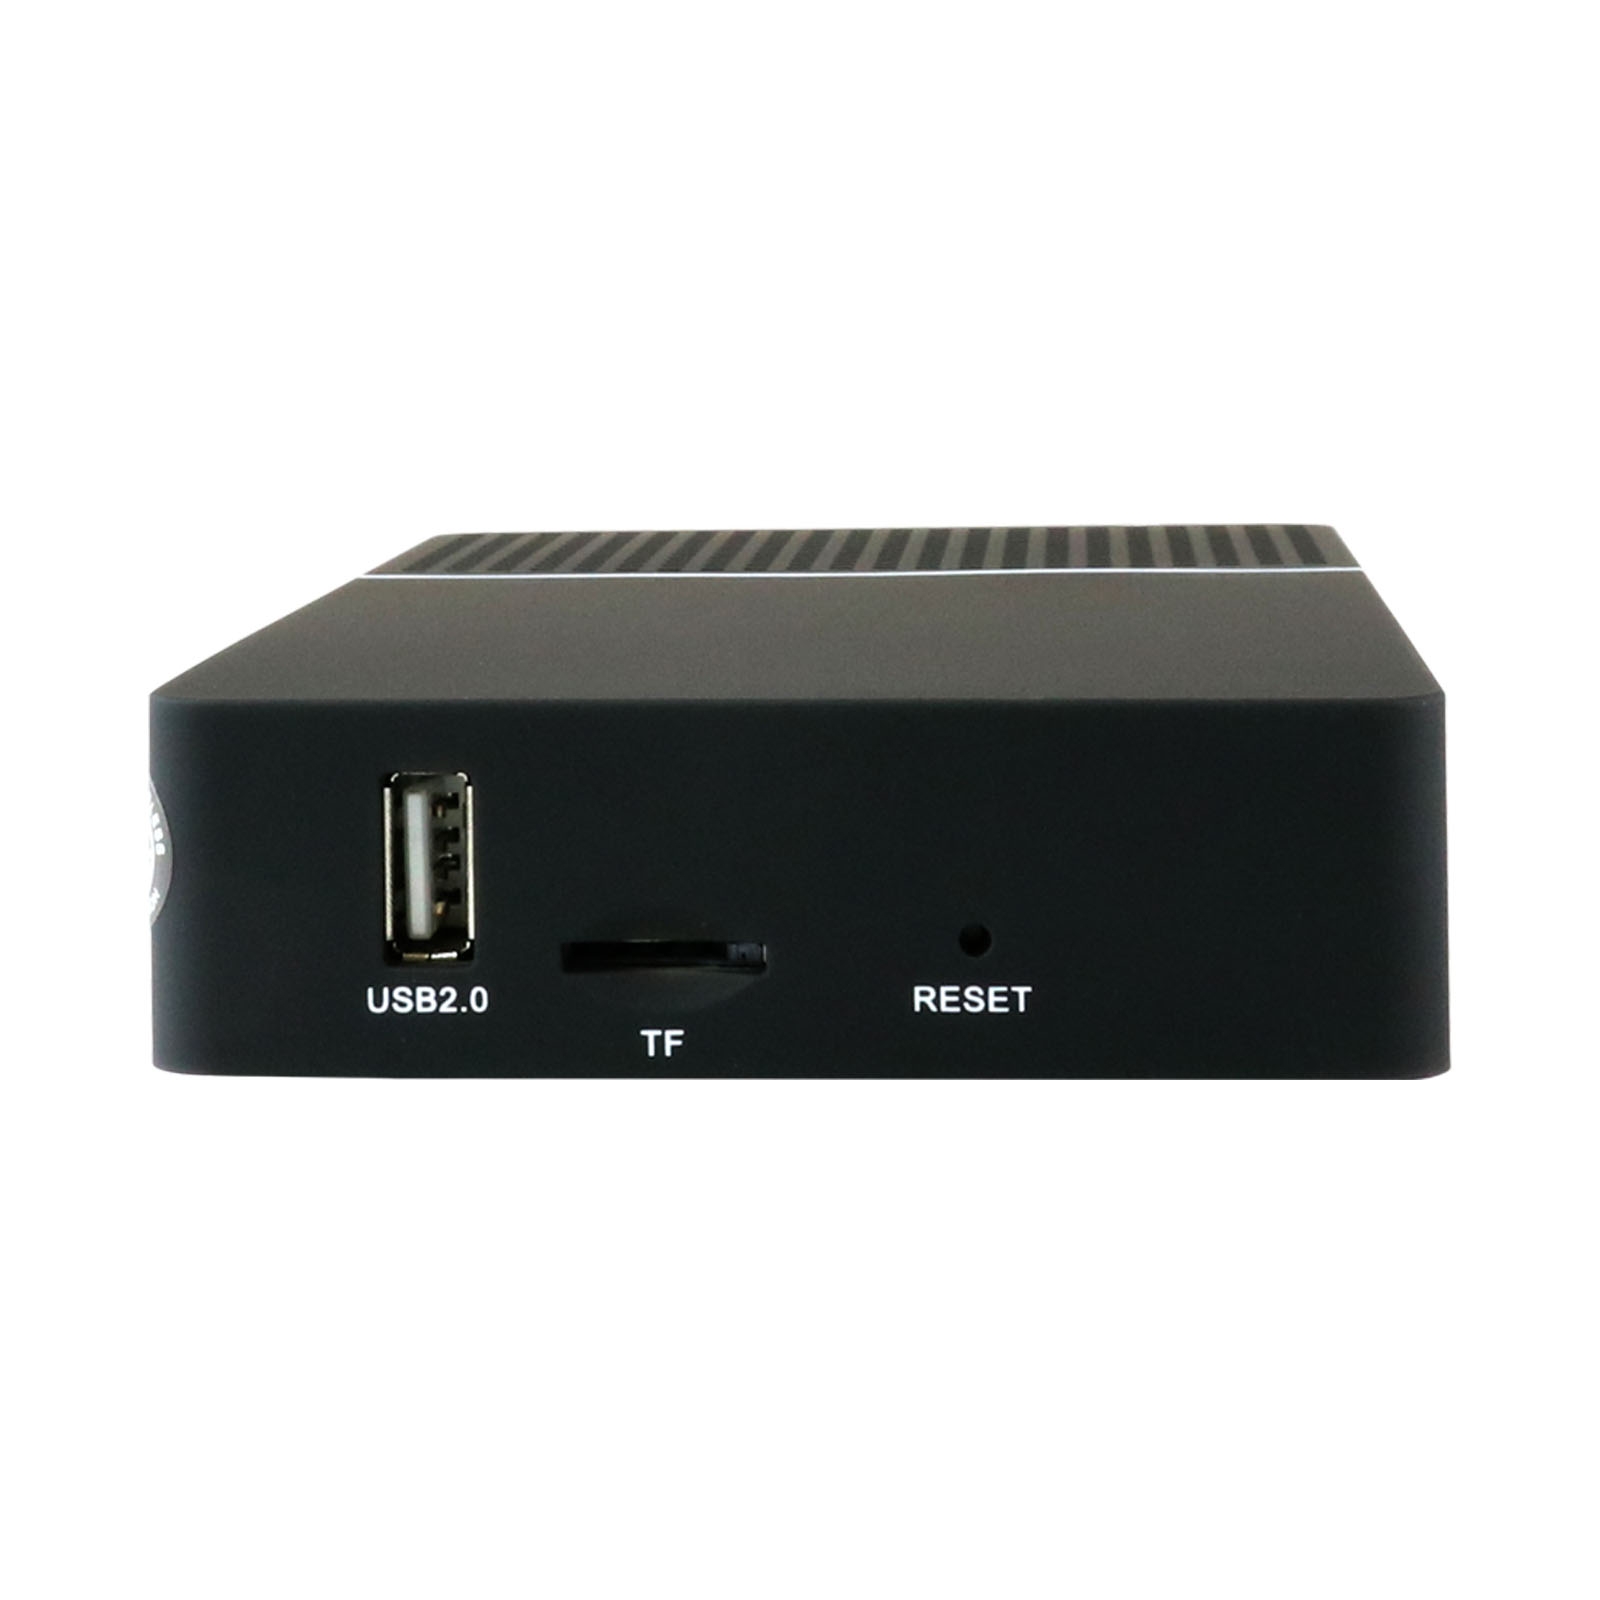 Maxytec Multibox 4K UHD 2160p E2 Linux USB HDMI DVB-S2X Dual Sat Receiver